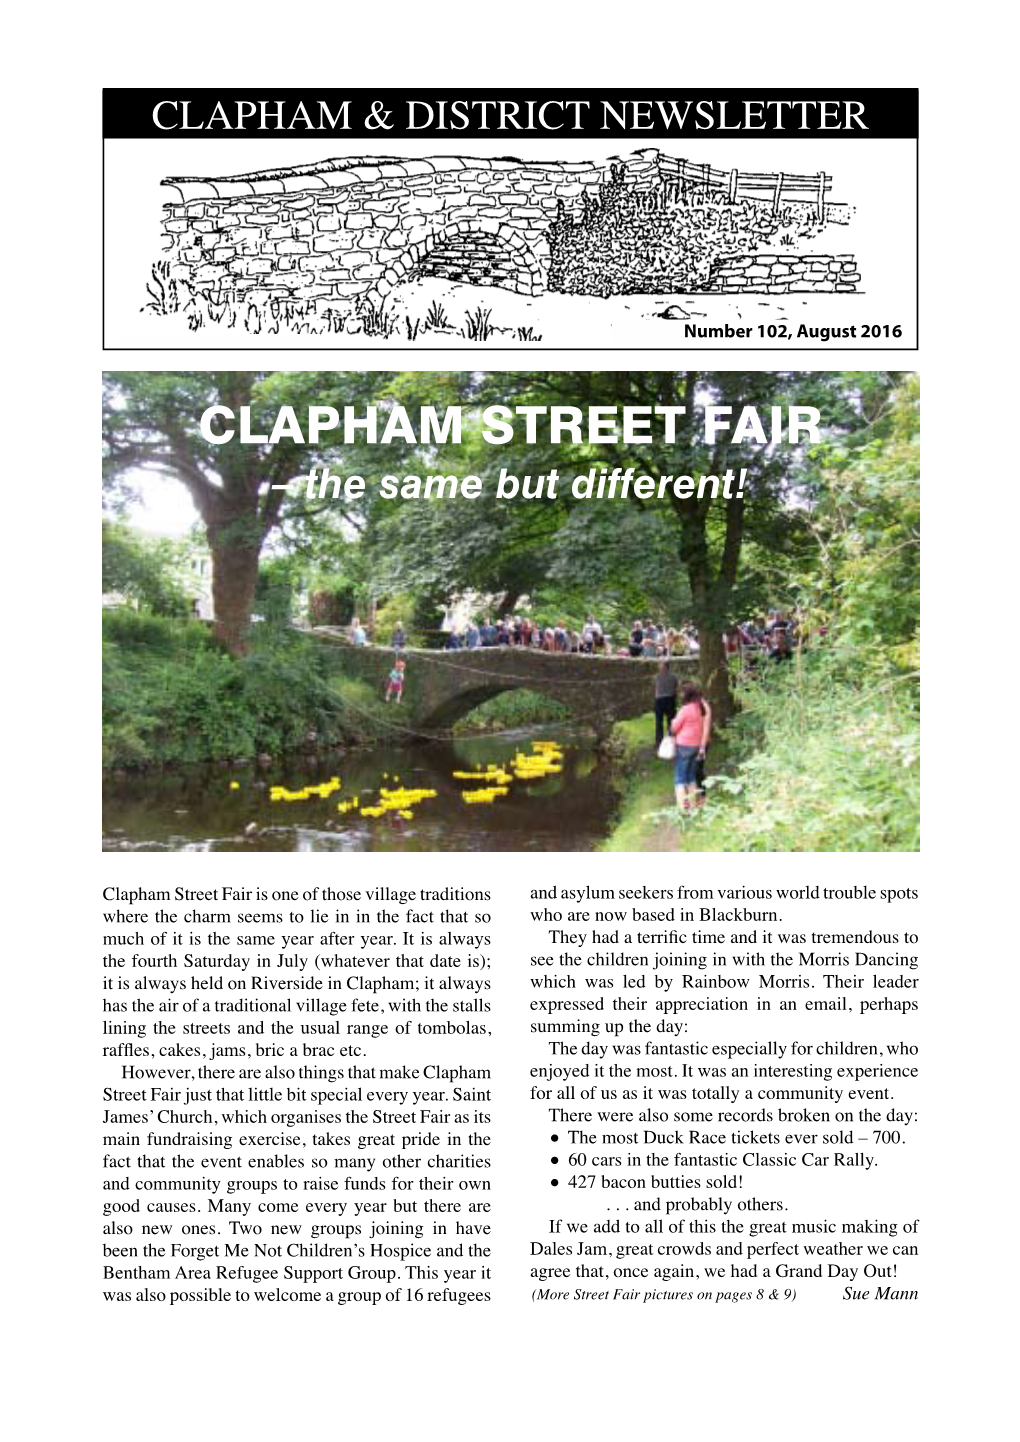 CLAPHAM STREET FAIR – the Same but Different!